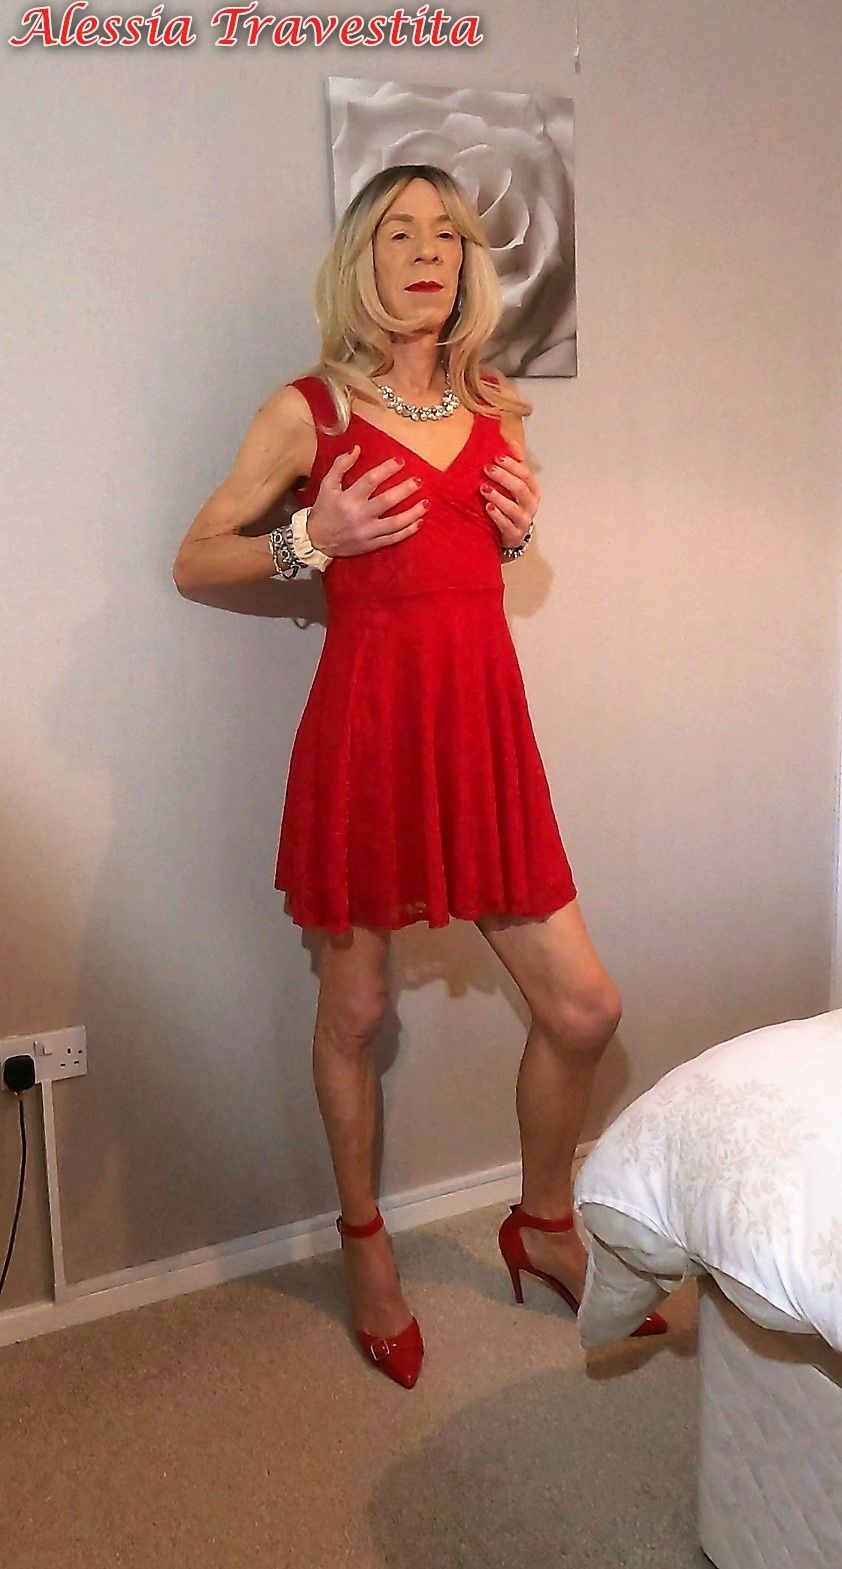 65 Alessia Travestita in Flirty Red Dress #39